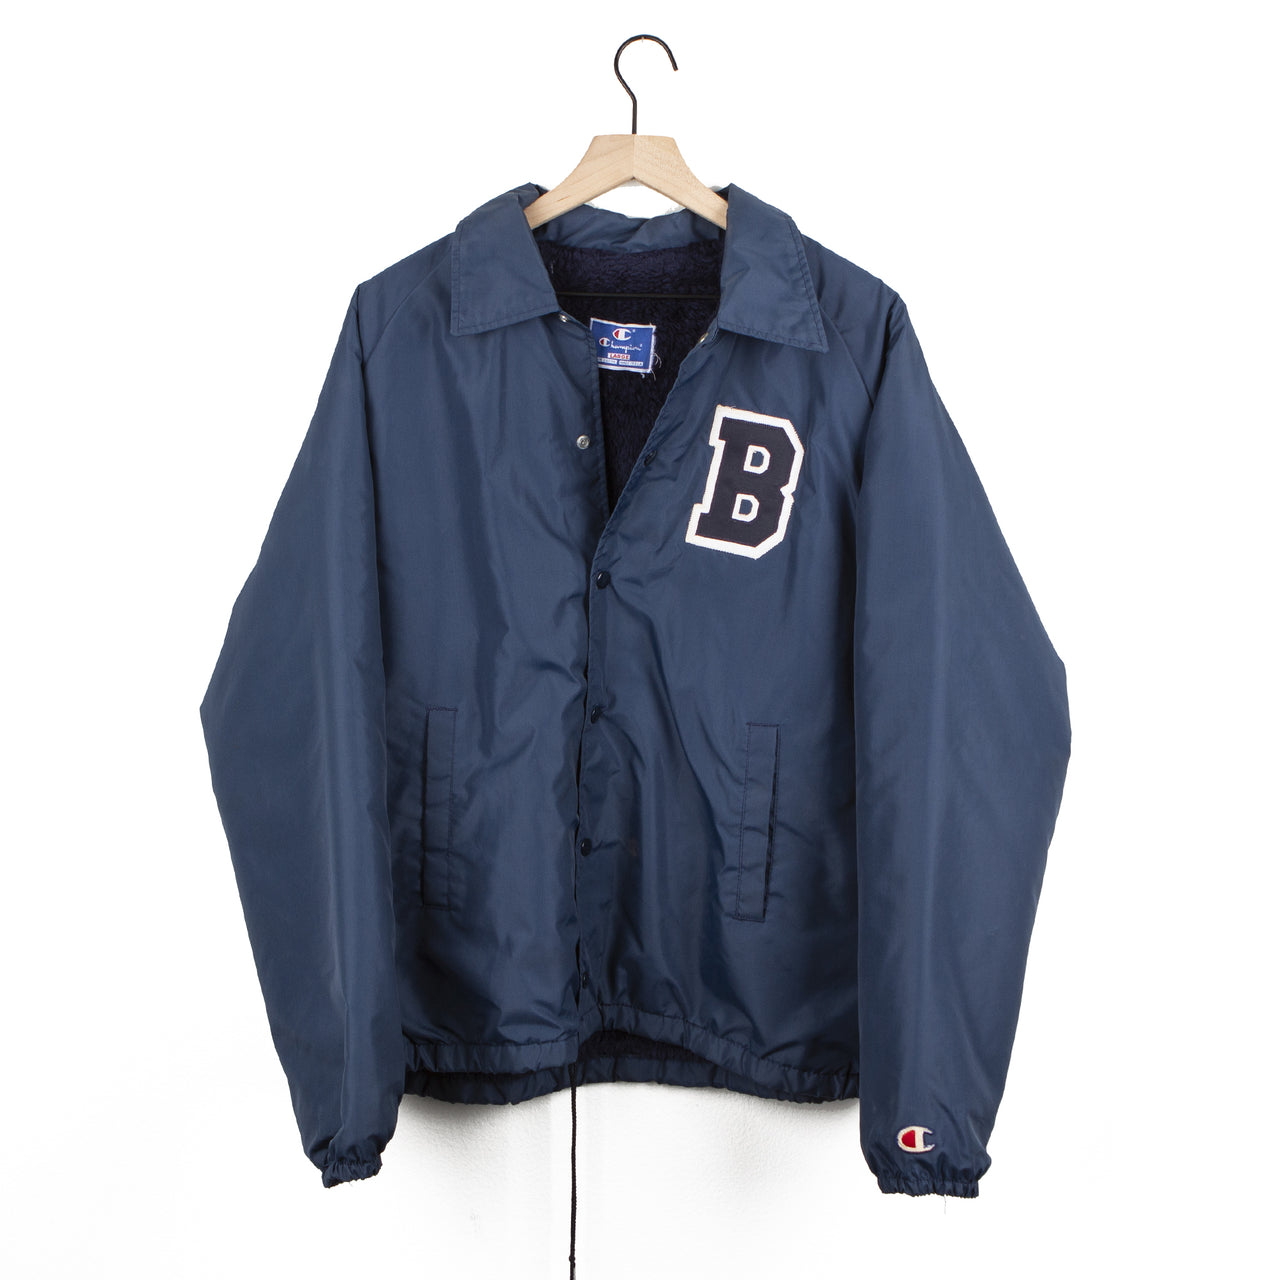 No. 89348 (Benjamin Varsity Champion Jacket)